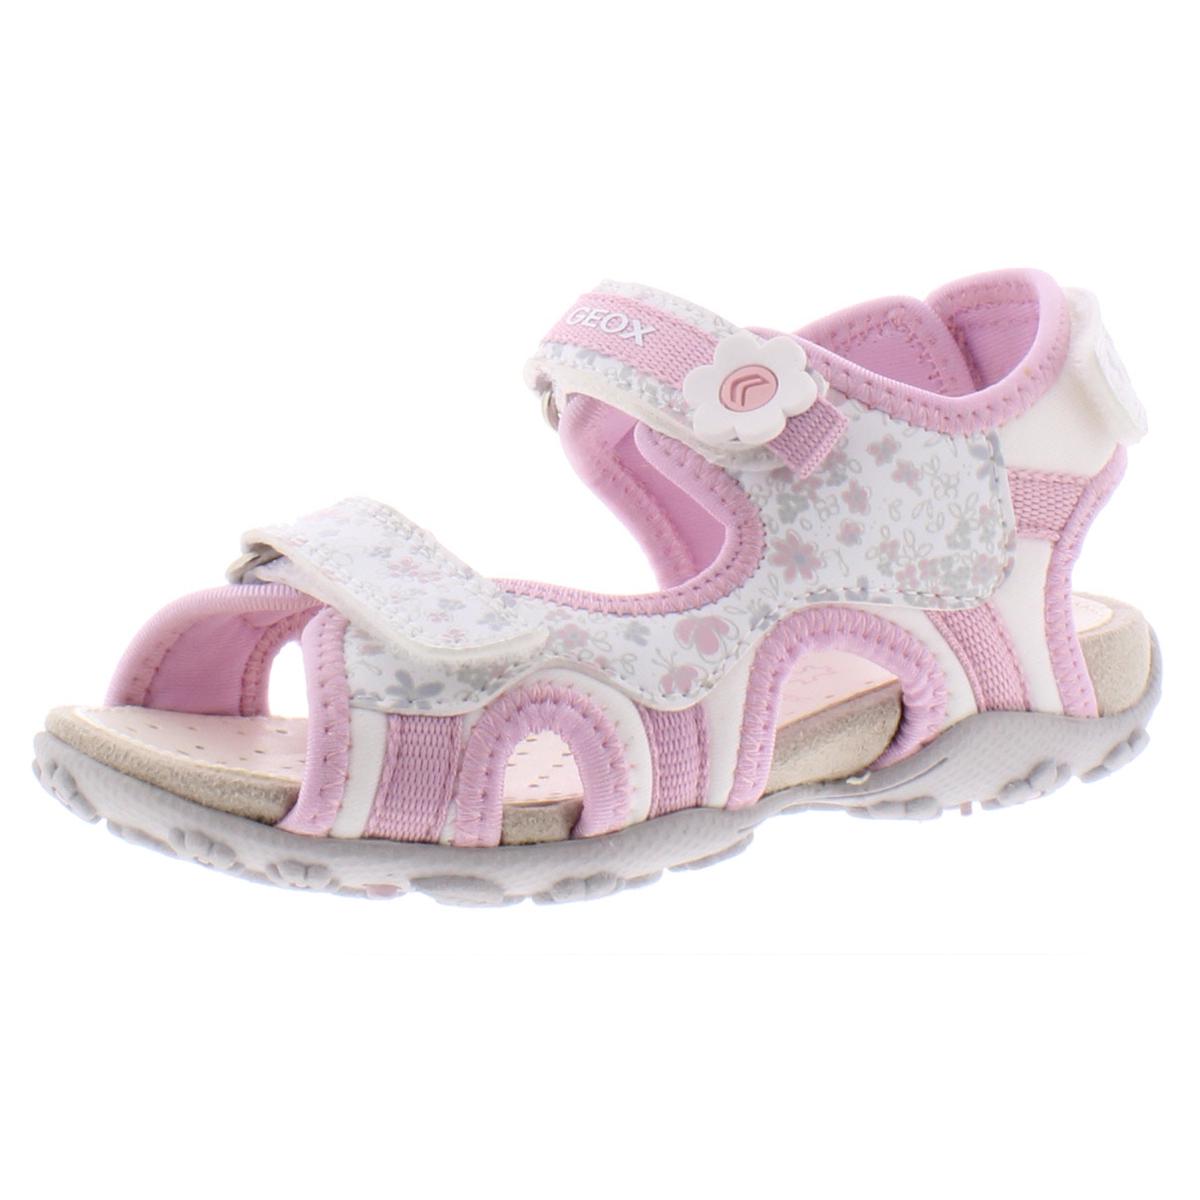 Geox Respira Girls Roxanne White Sport Sandals 9 Medium (B,M) Toddler ...